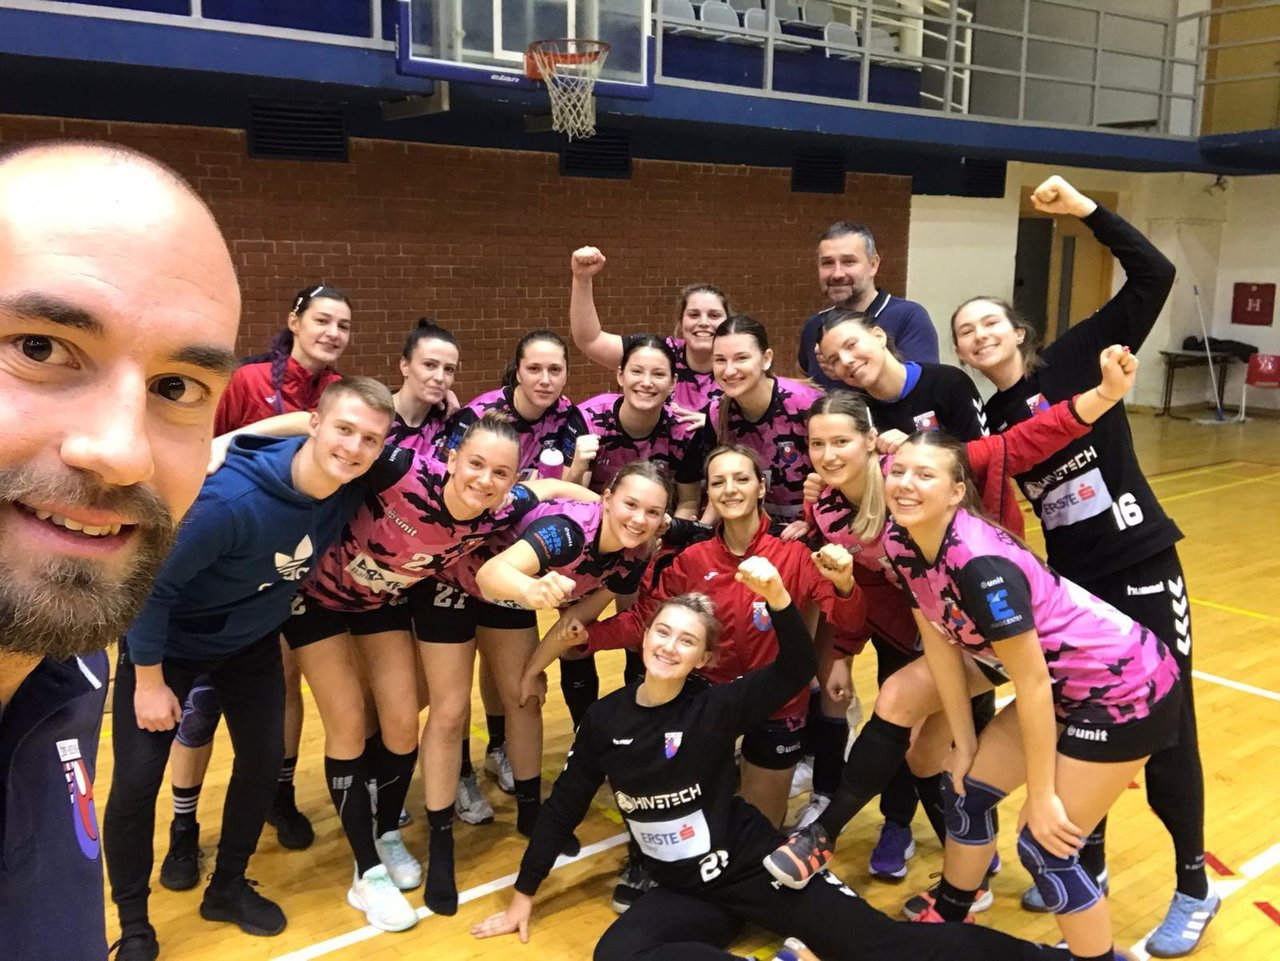 Fotografija: Rukometašice Ženskog rukometnog kluba Bjelovar slave pobjedu nad ekipom Čakovca/Foto: Facebook ŽERK BJelovar